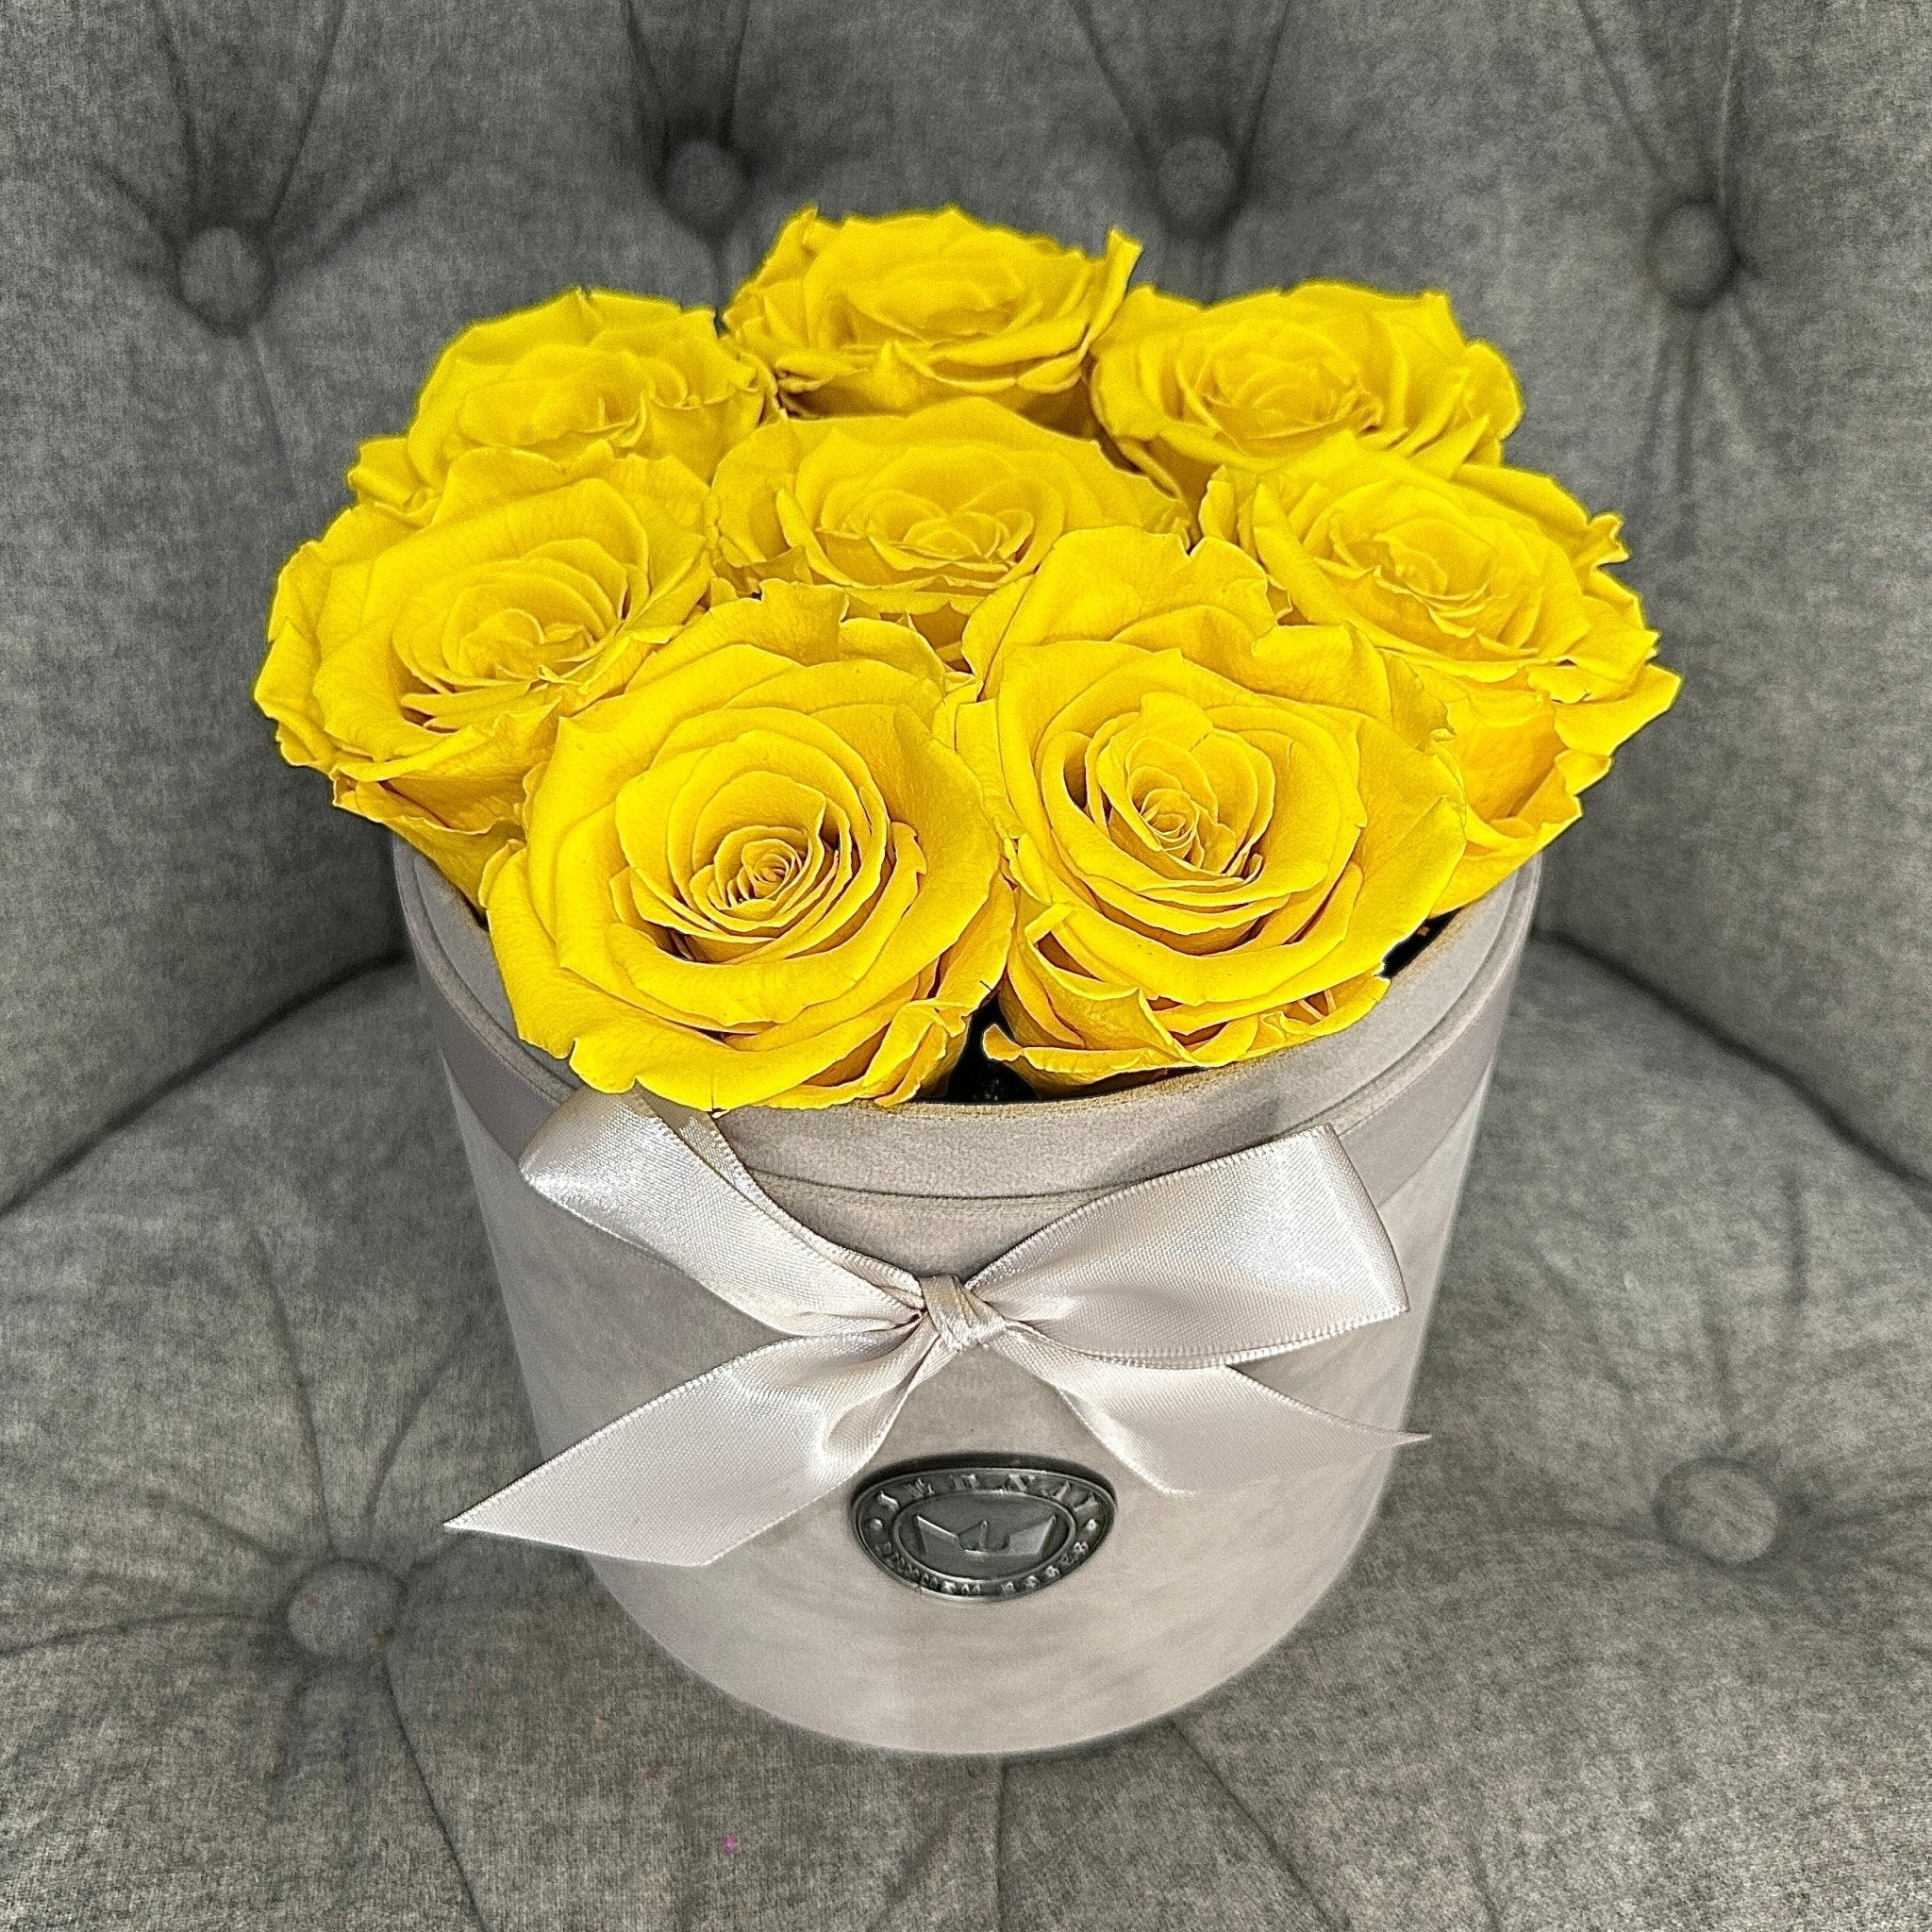 Medium Grey Suede Forever Rose Box - Sunshine Yellow Eternal Roses - Jednay Roses